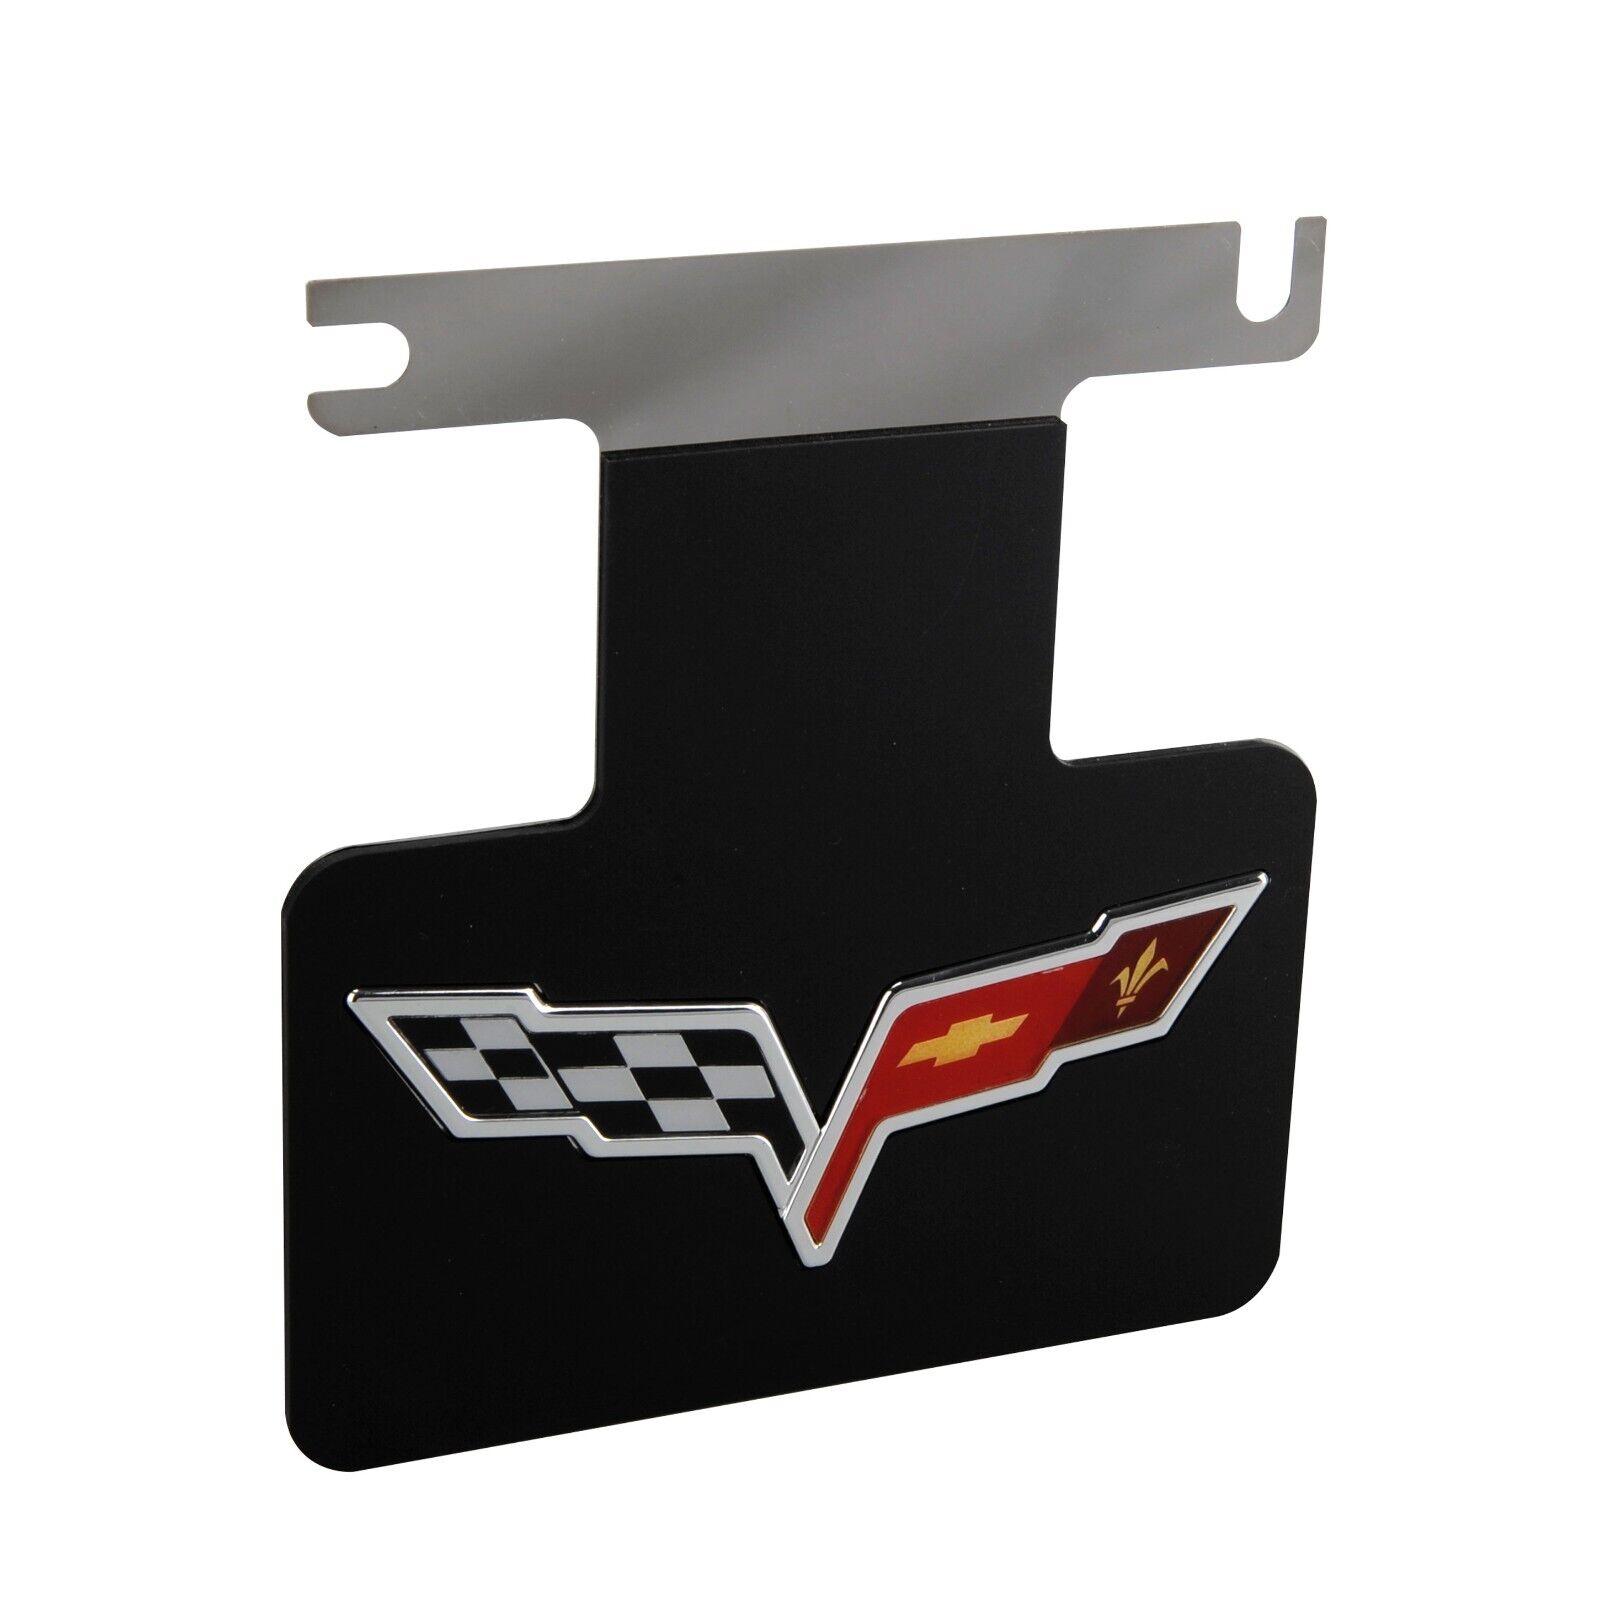 Black Steel Exhaust Filler Plate w/ Crossed Flags Emblem for 2005-13 C6 Corvette